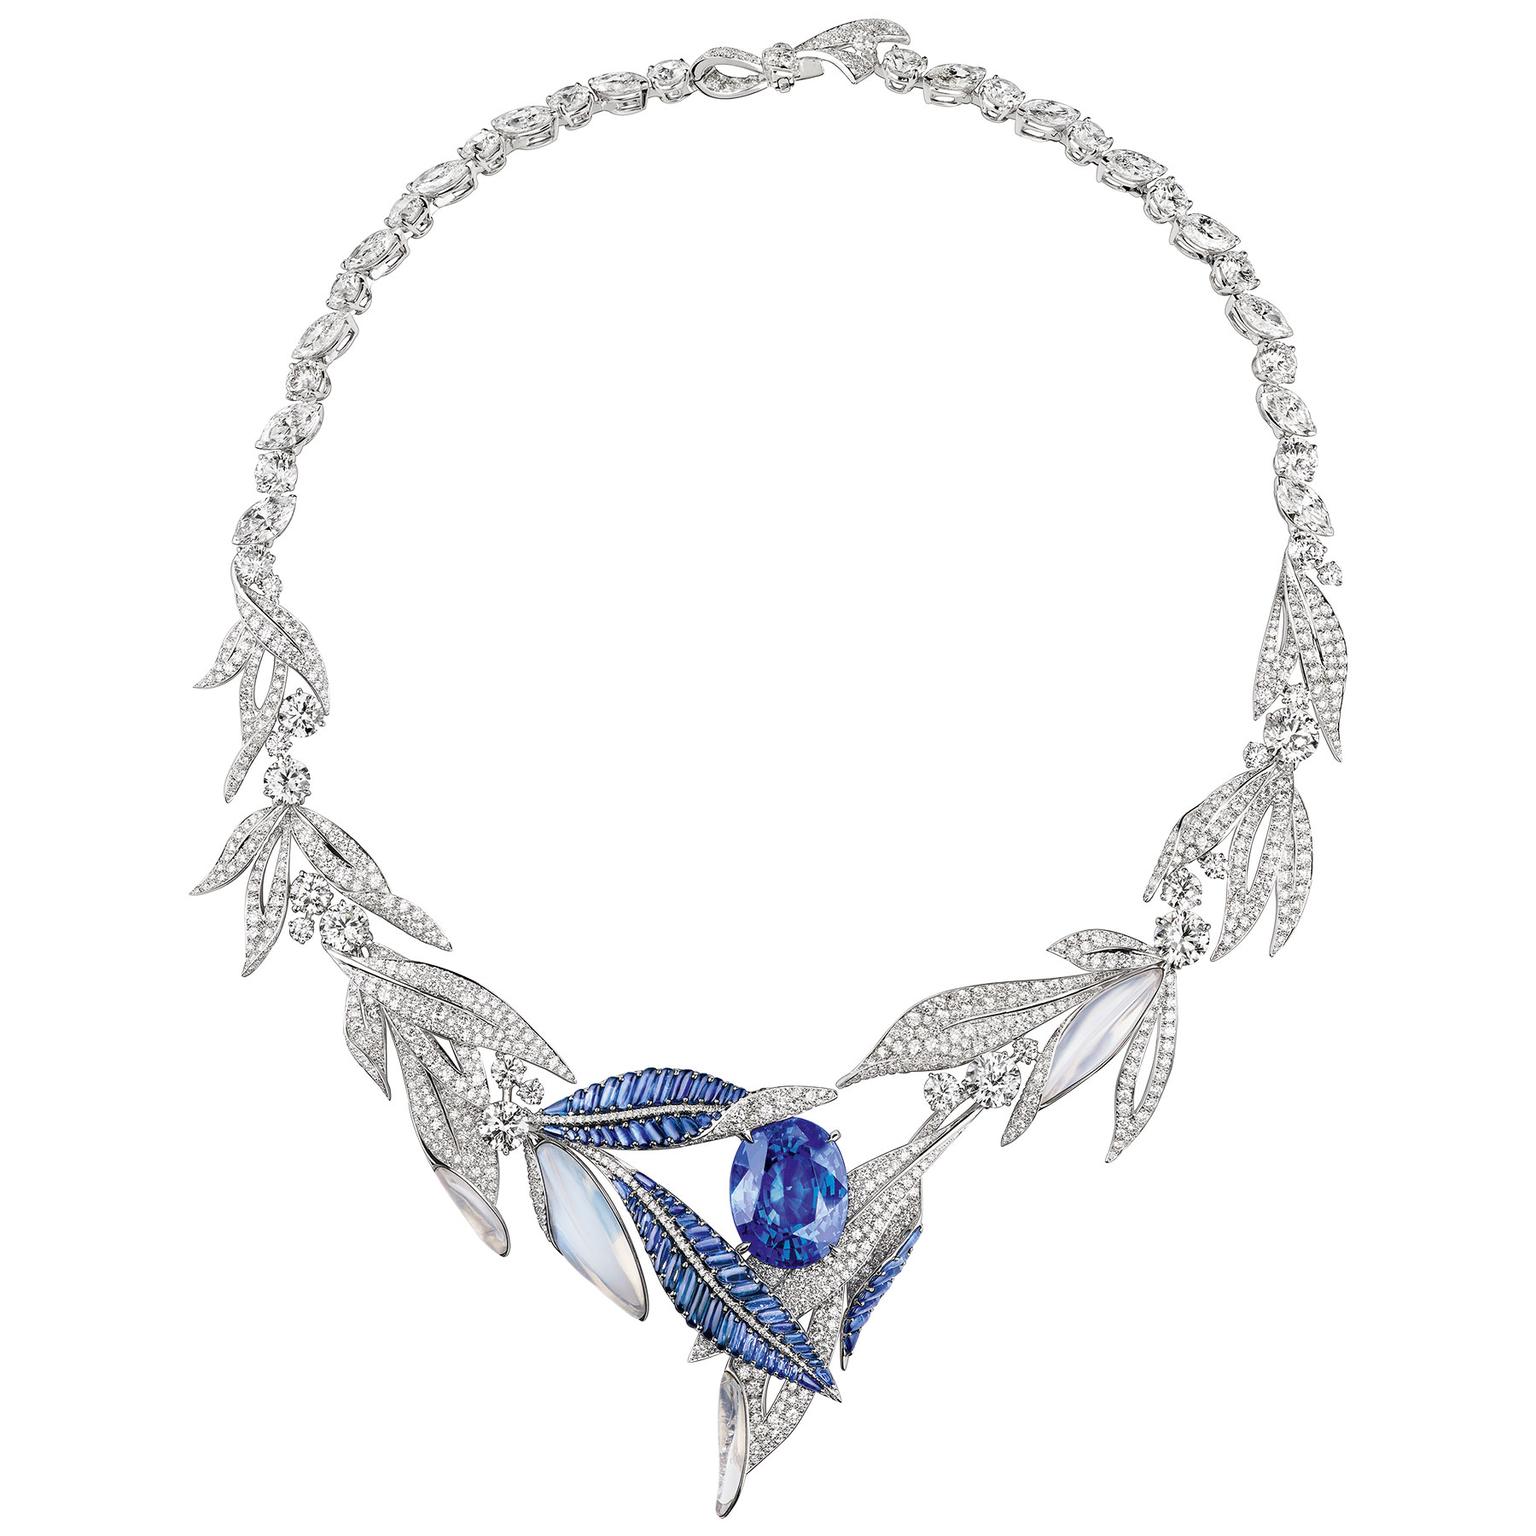 Chaumet, Mellerio, Boutemy (Jewels Art Deco) 1937 Necklace